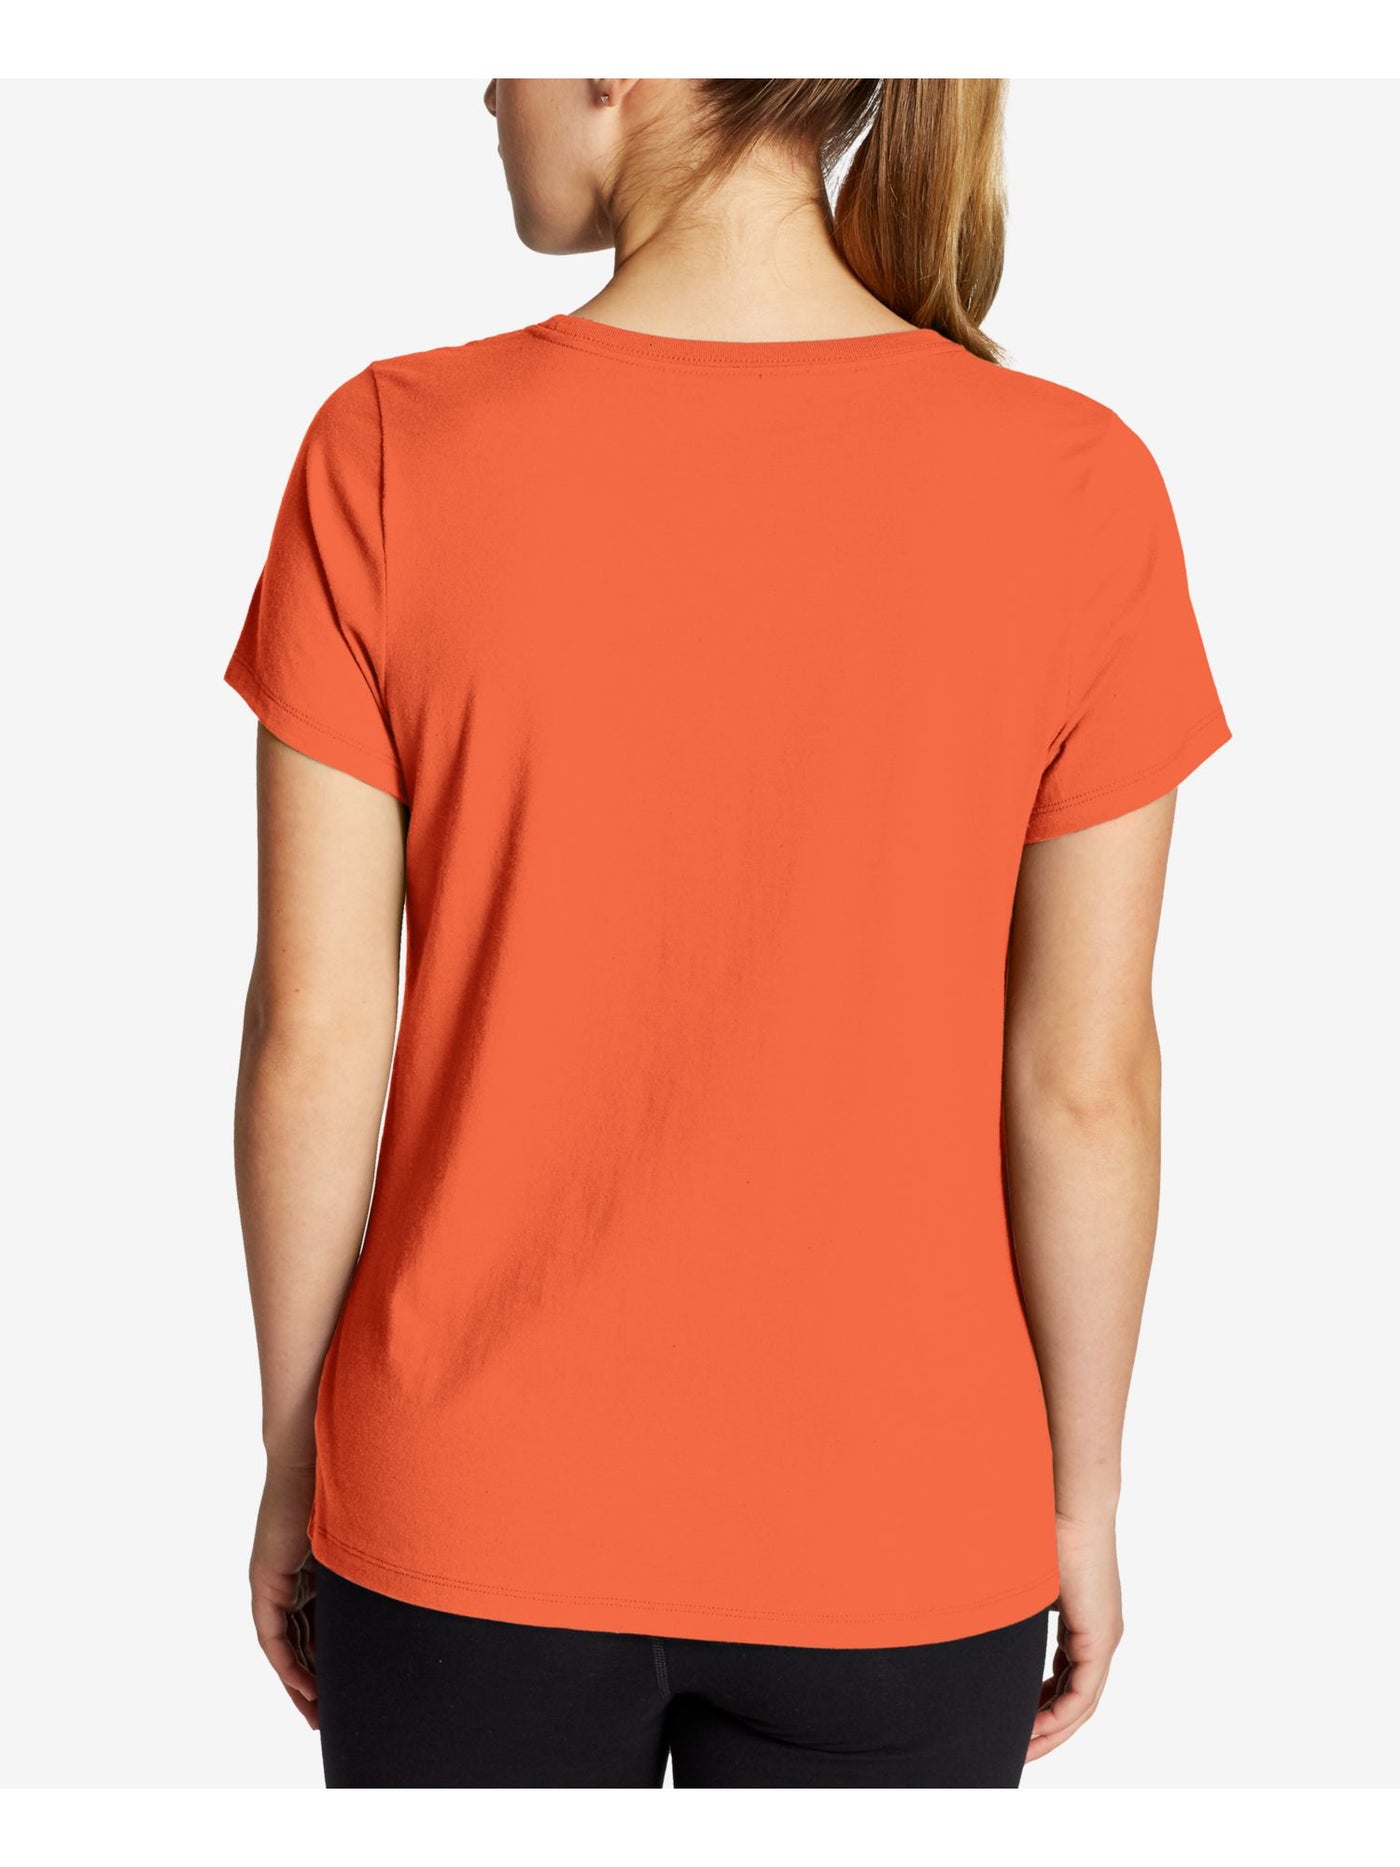 CHAMPION Womens Orange Stretch Ribbed Logo Graphic Short Sleeve Crew Neck T-Shirt XS